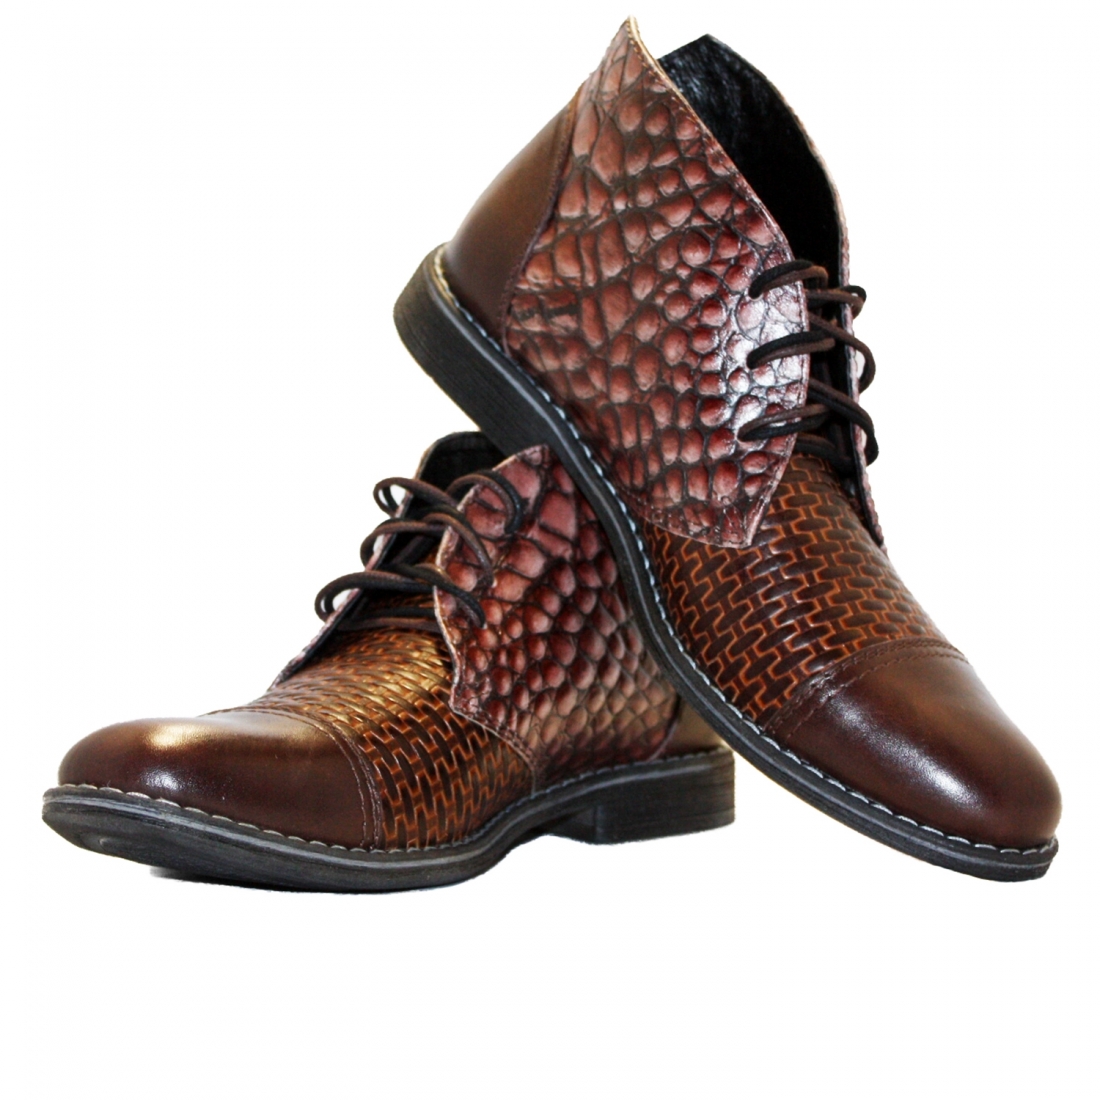 copy of Modello Orevillo - Desert Boots - Handmade Colorful Italian Leather Shoes